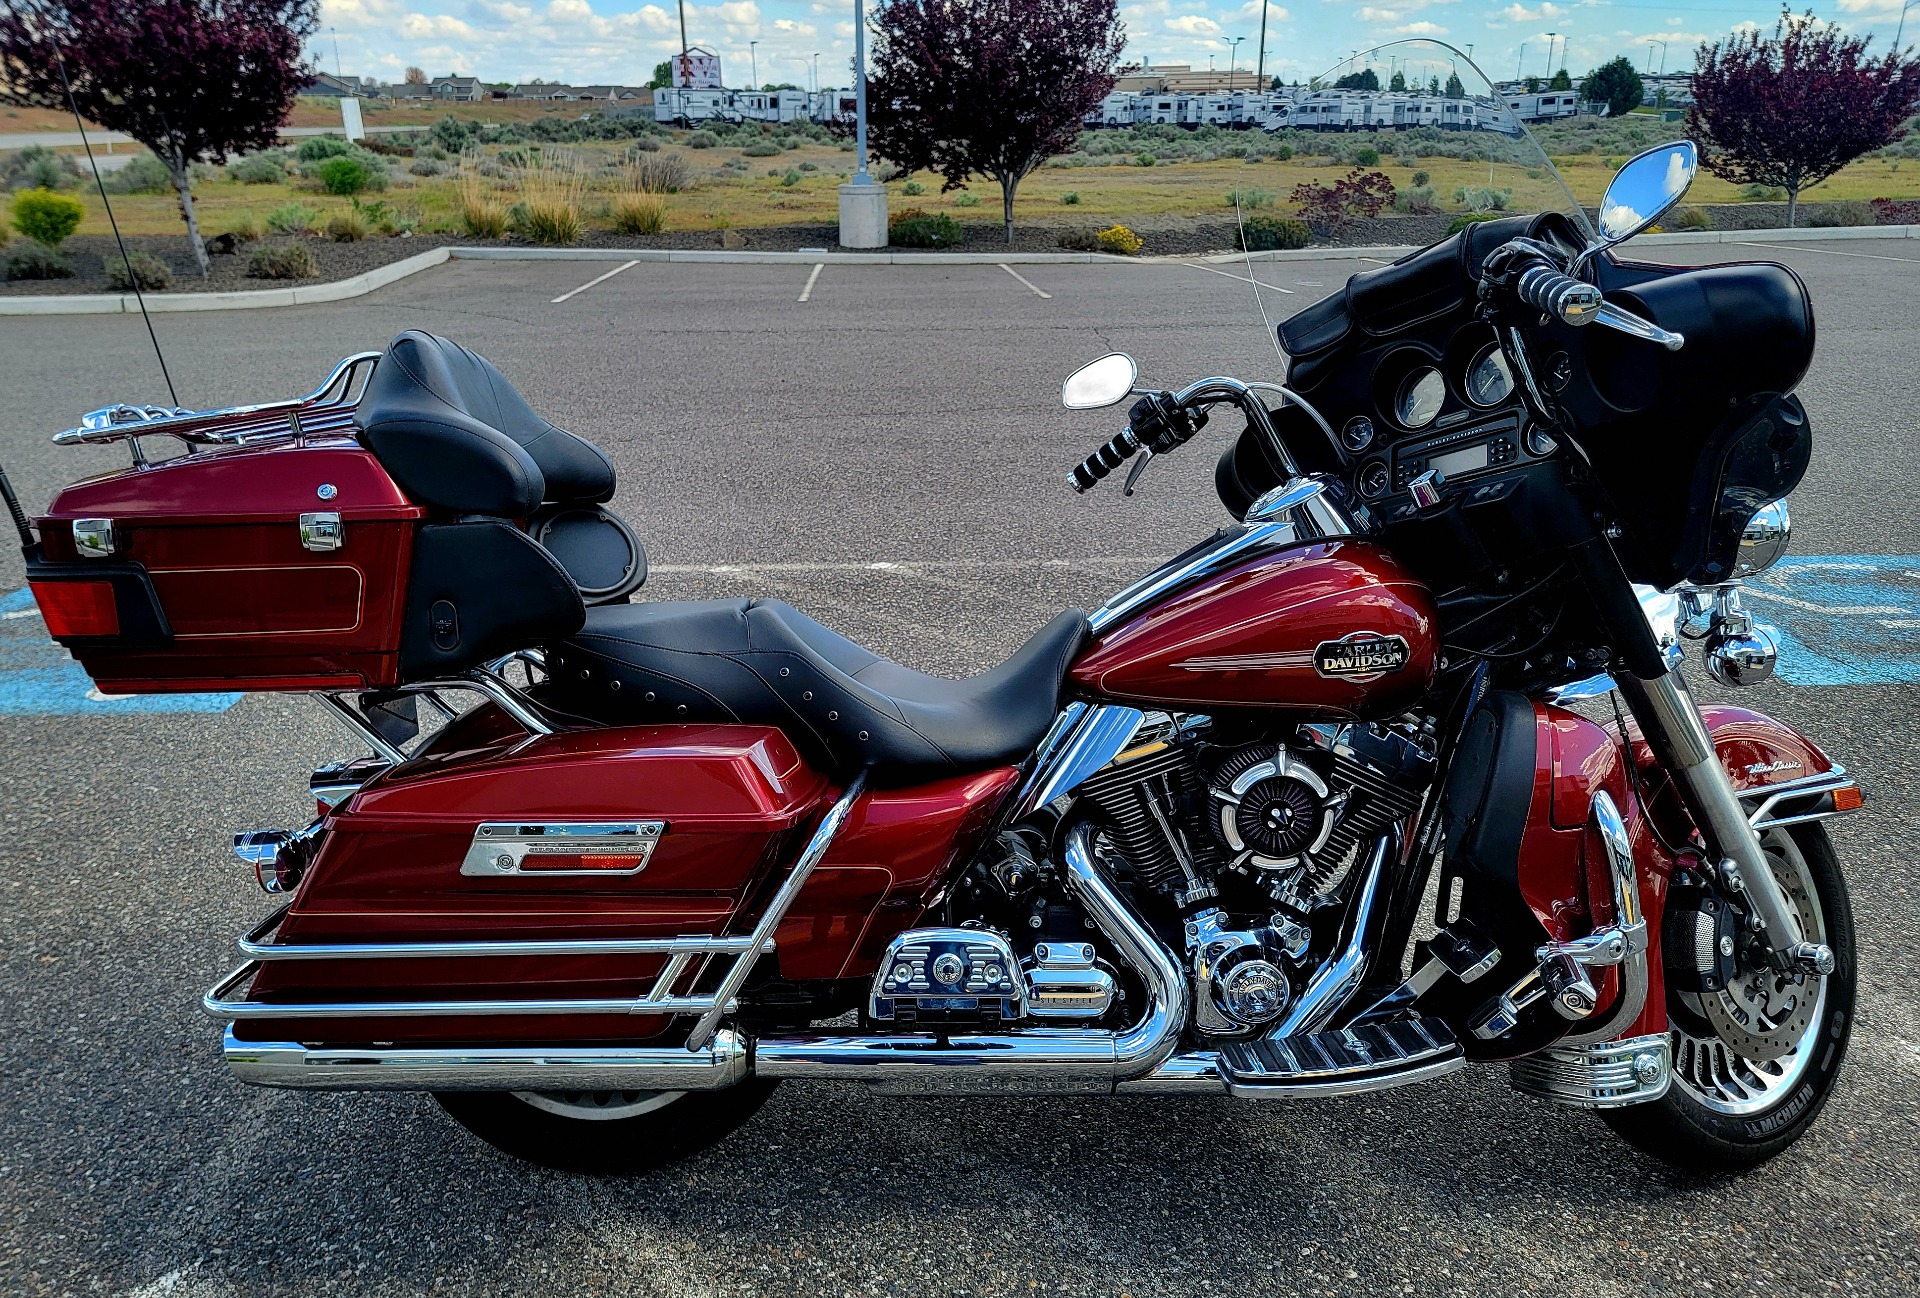 2009 Harley-Davidson Ultra Classic® Electra Glide® in Pasco, Washington - Photo 5